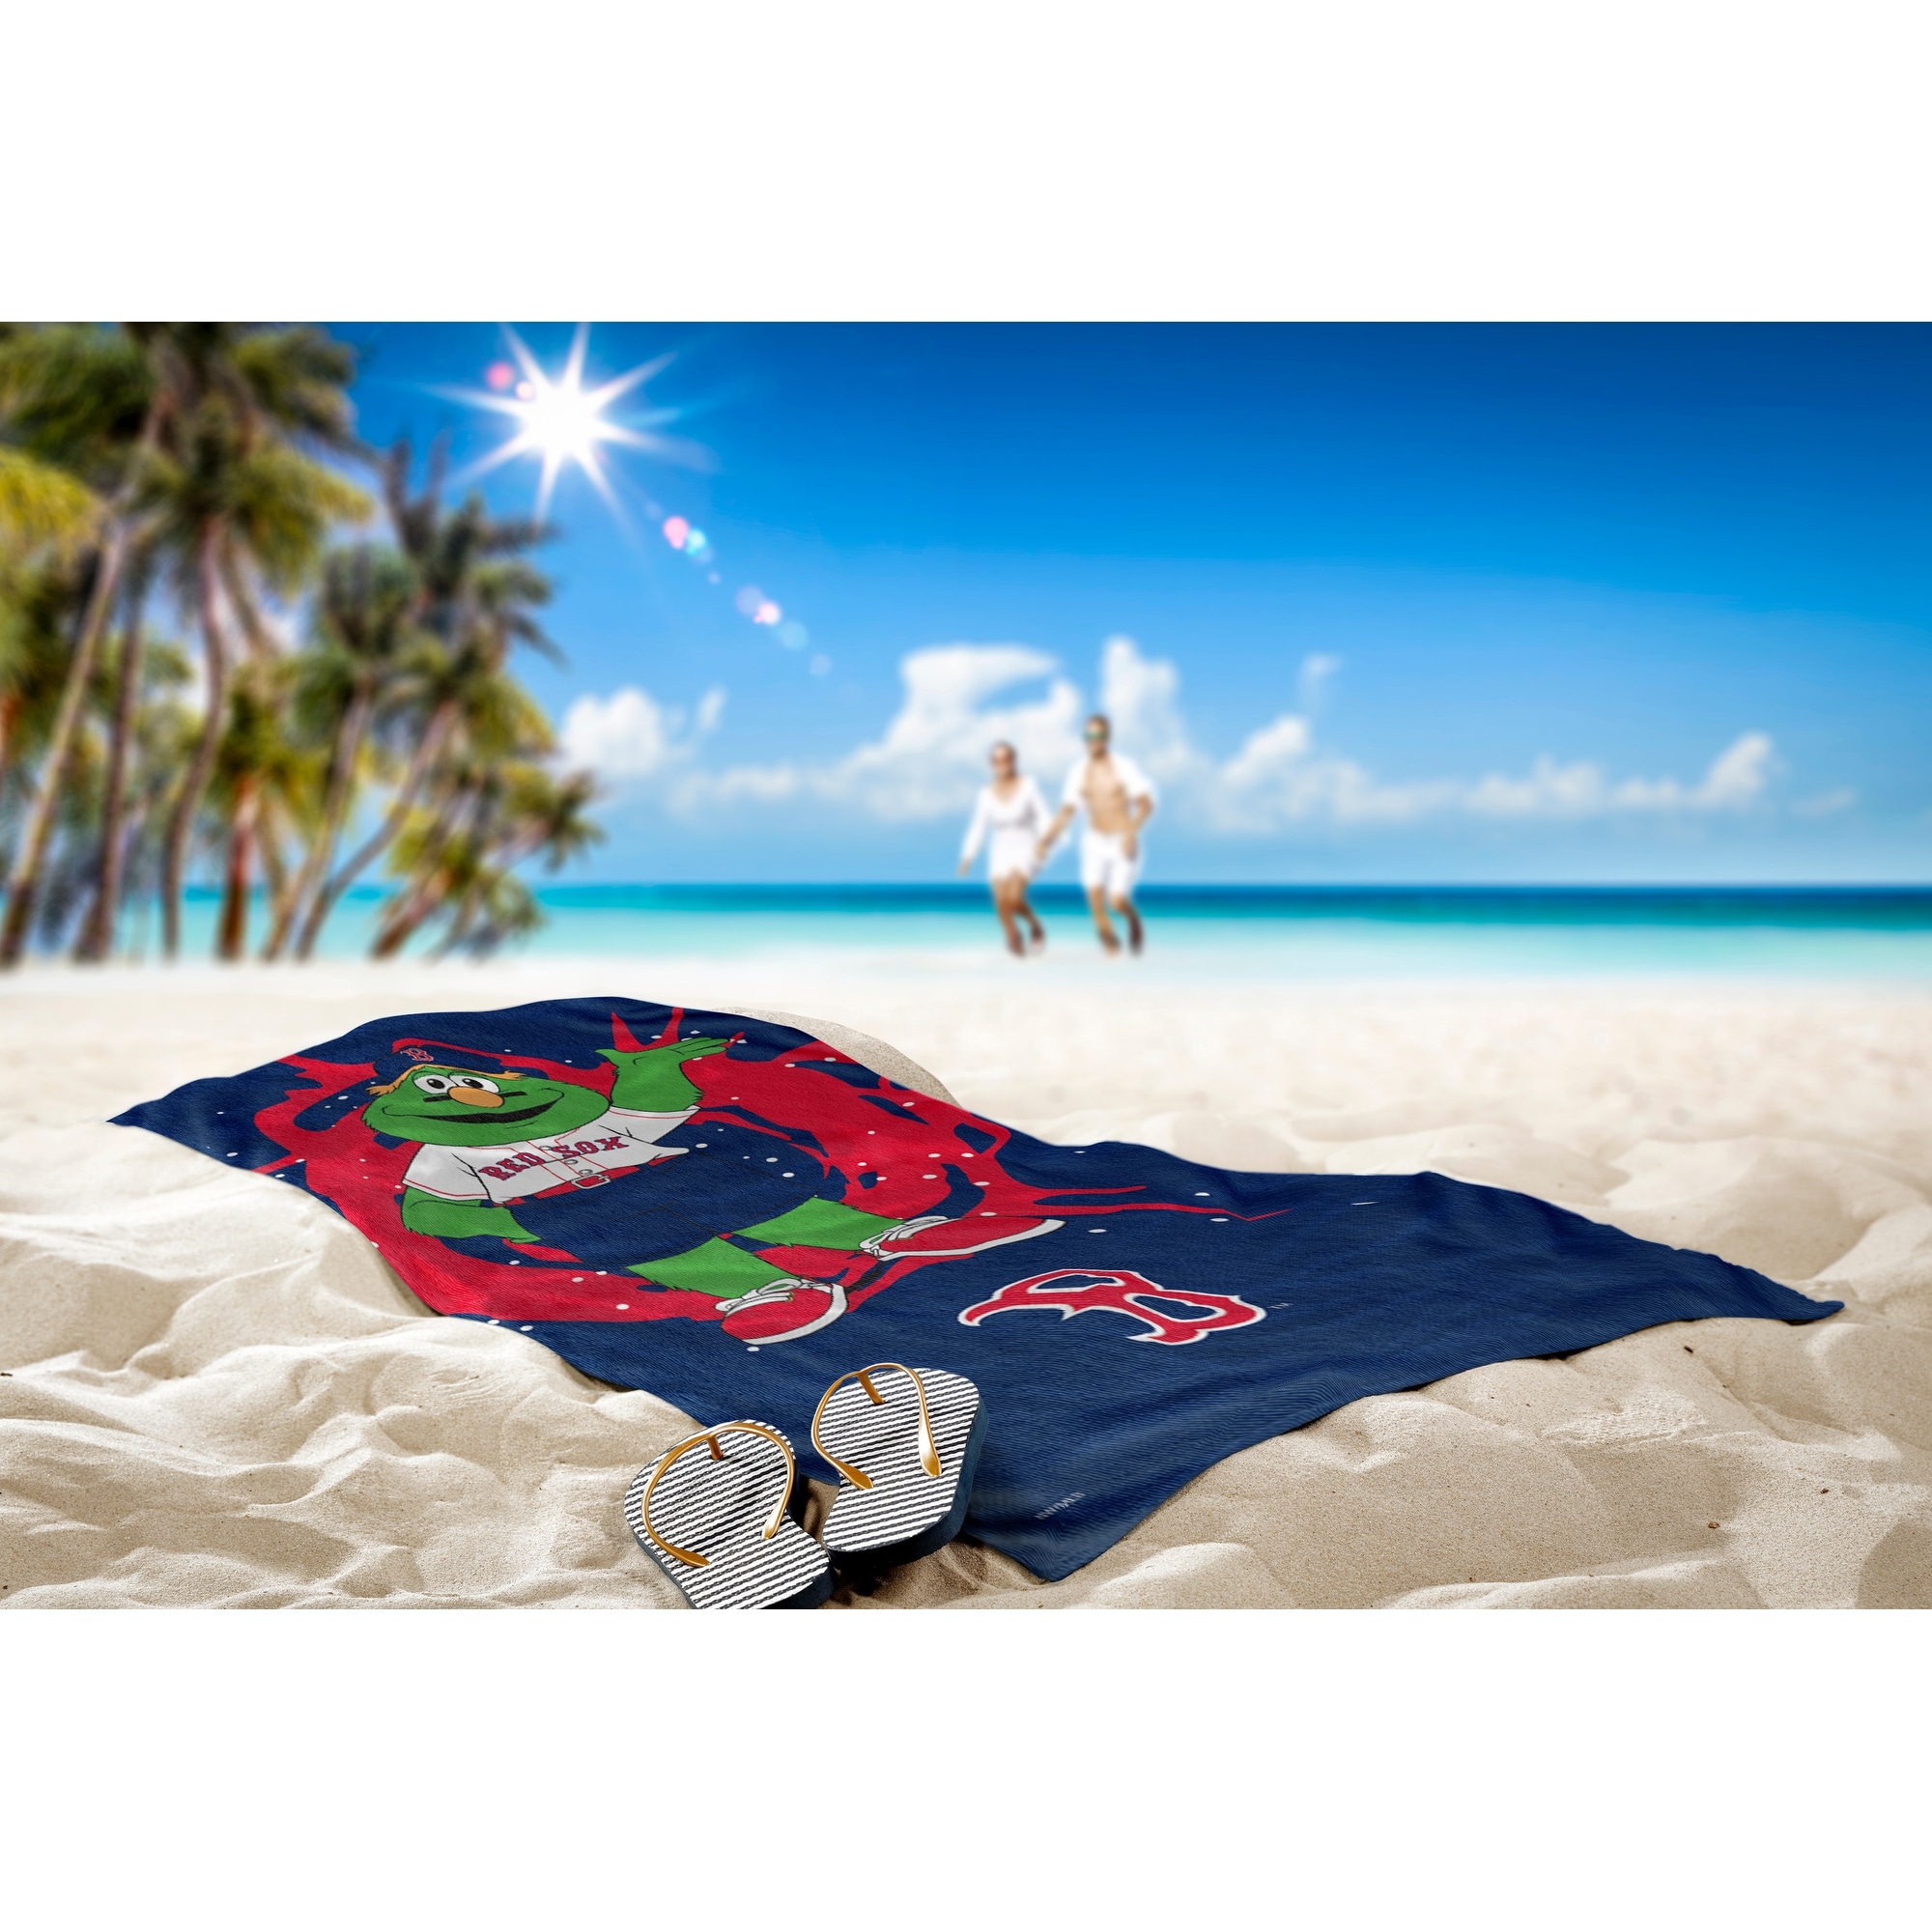 MLB Mascots - Red Sox, Printed Beach Towel - 30x60